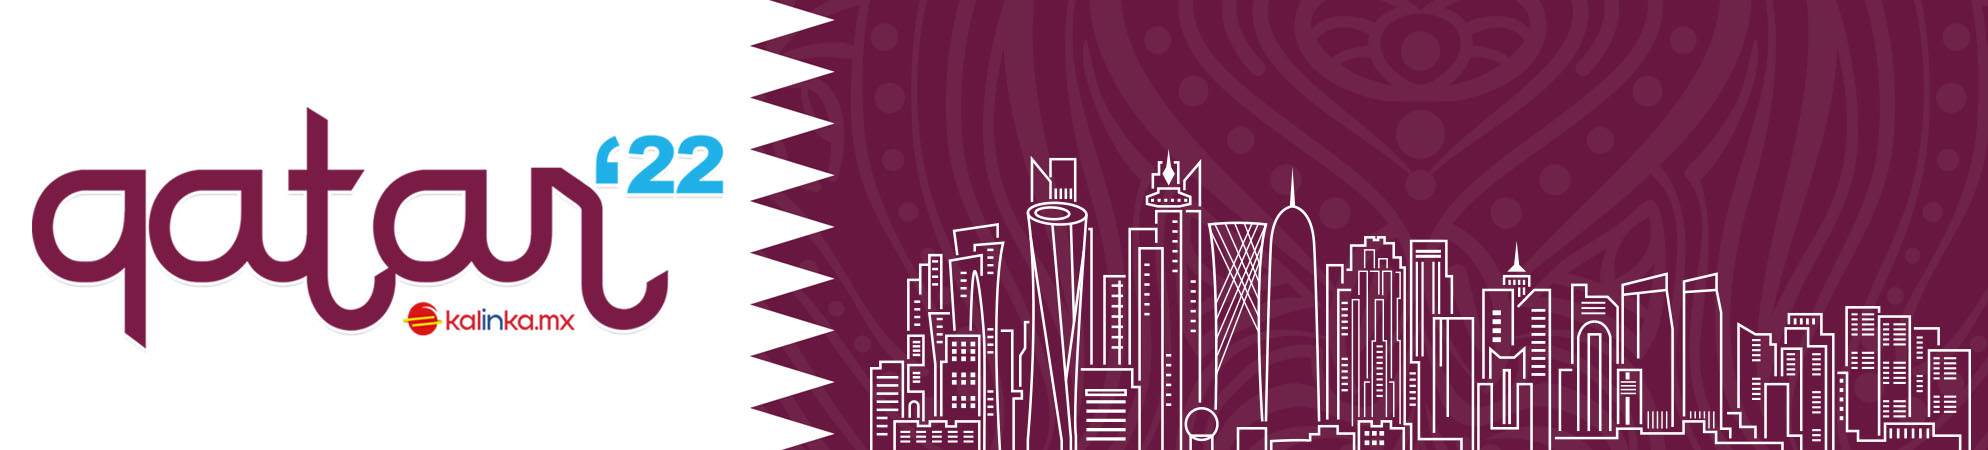 qatar 2022 paquetes